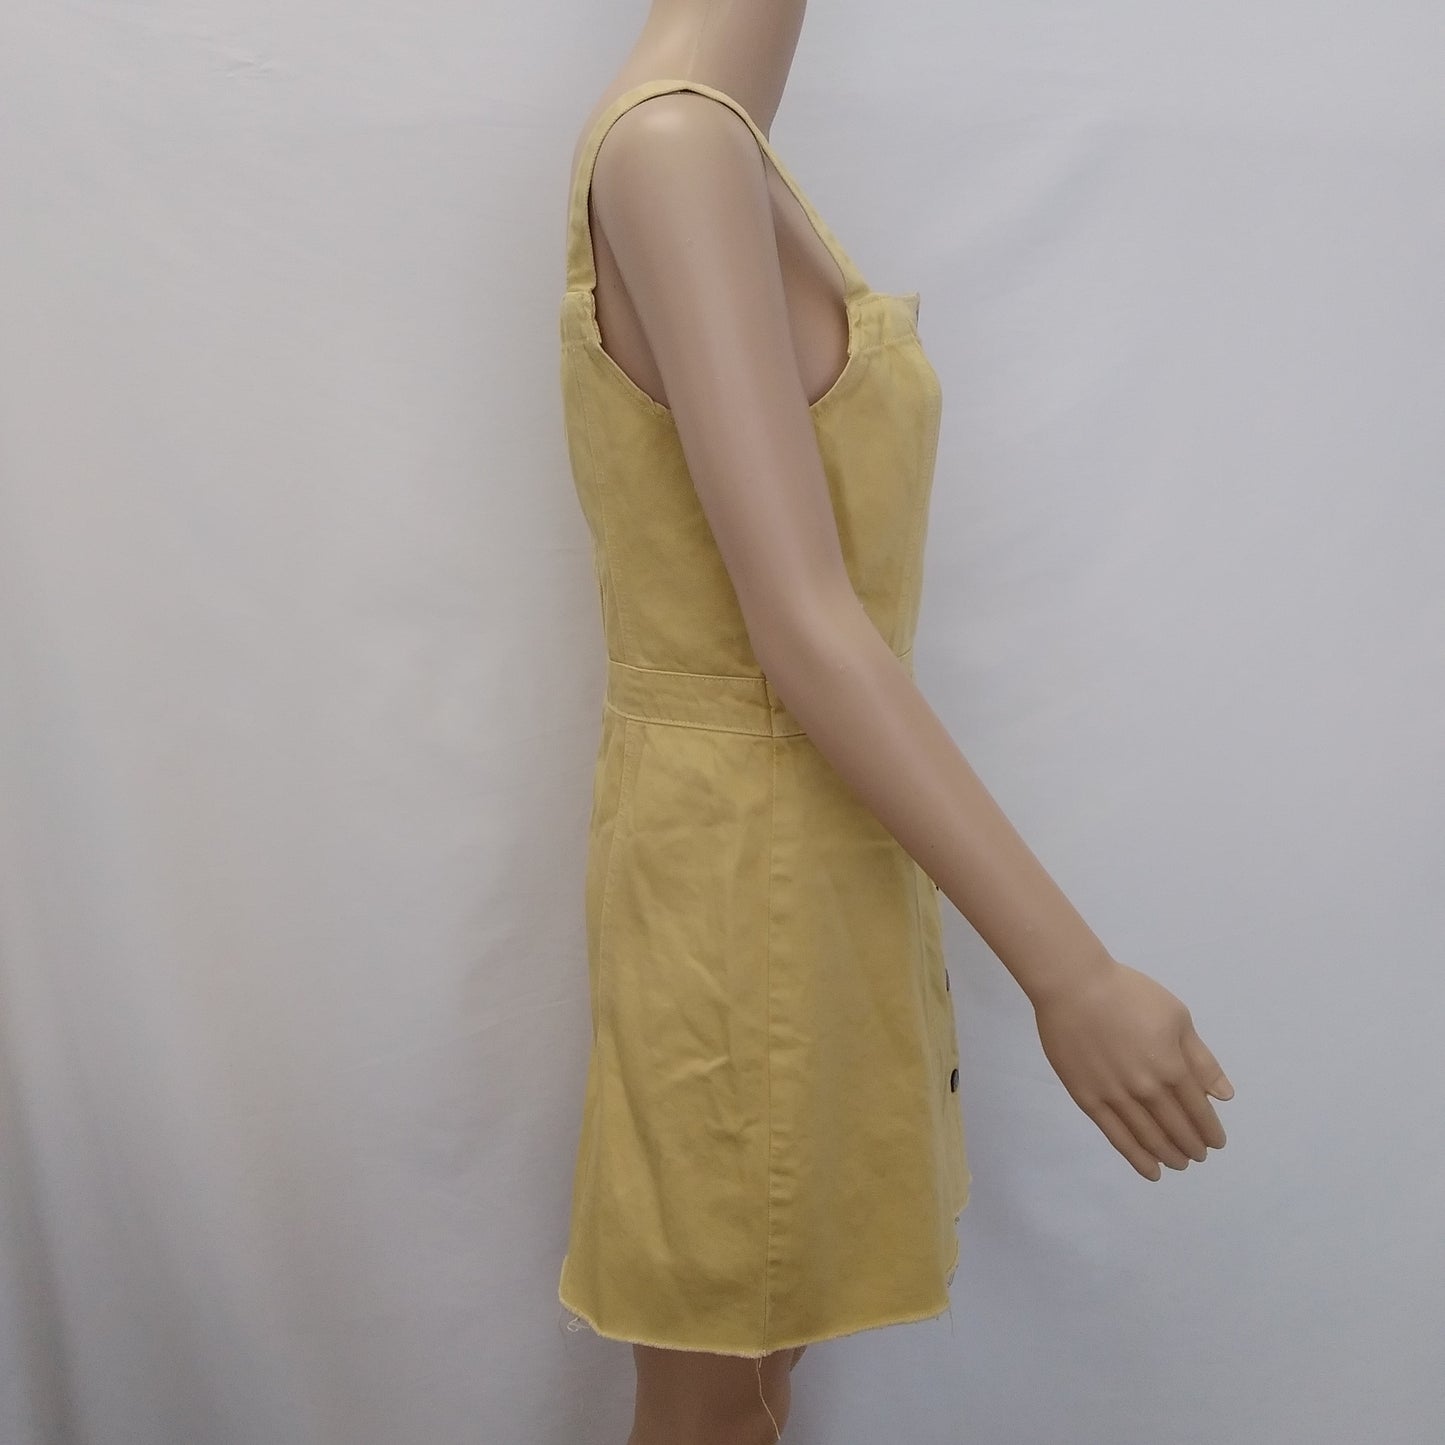 Boyish Kennedy Denim Sleeveless Mini Dress - Size: S